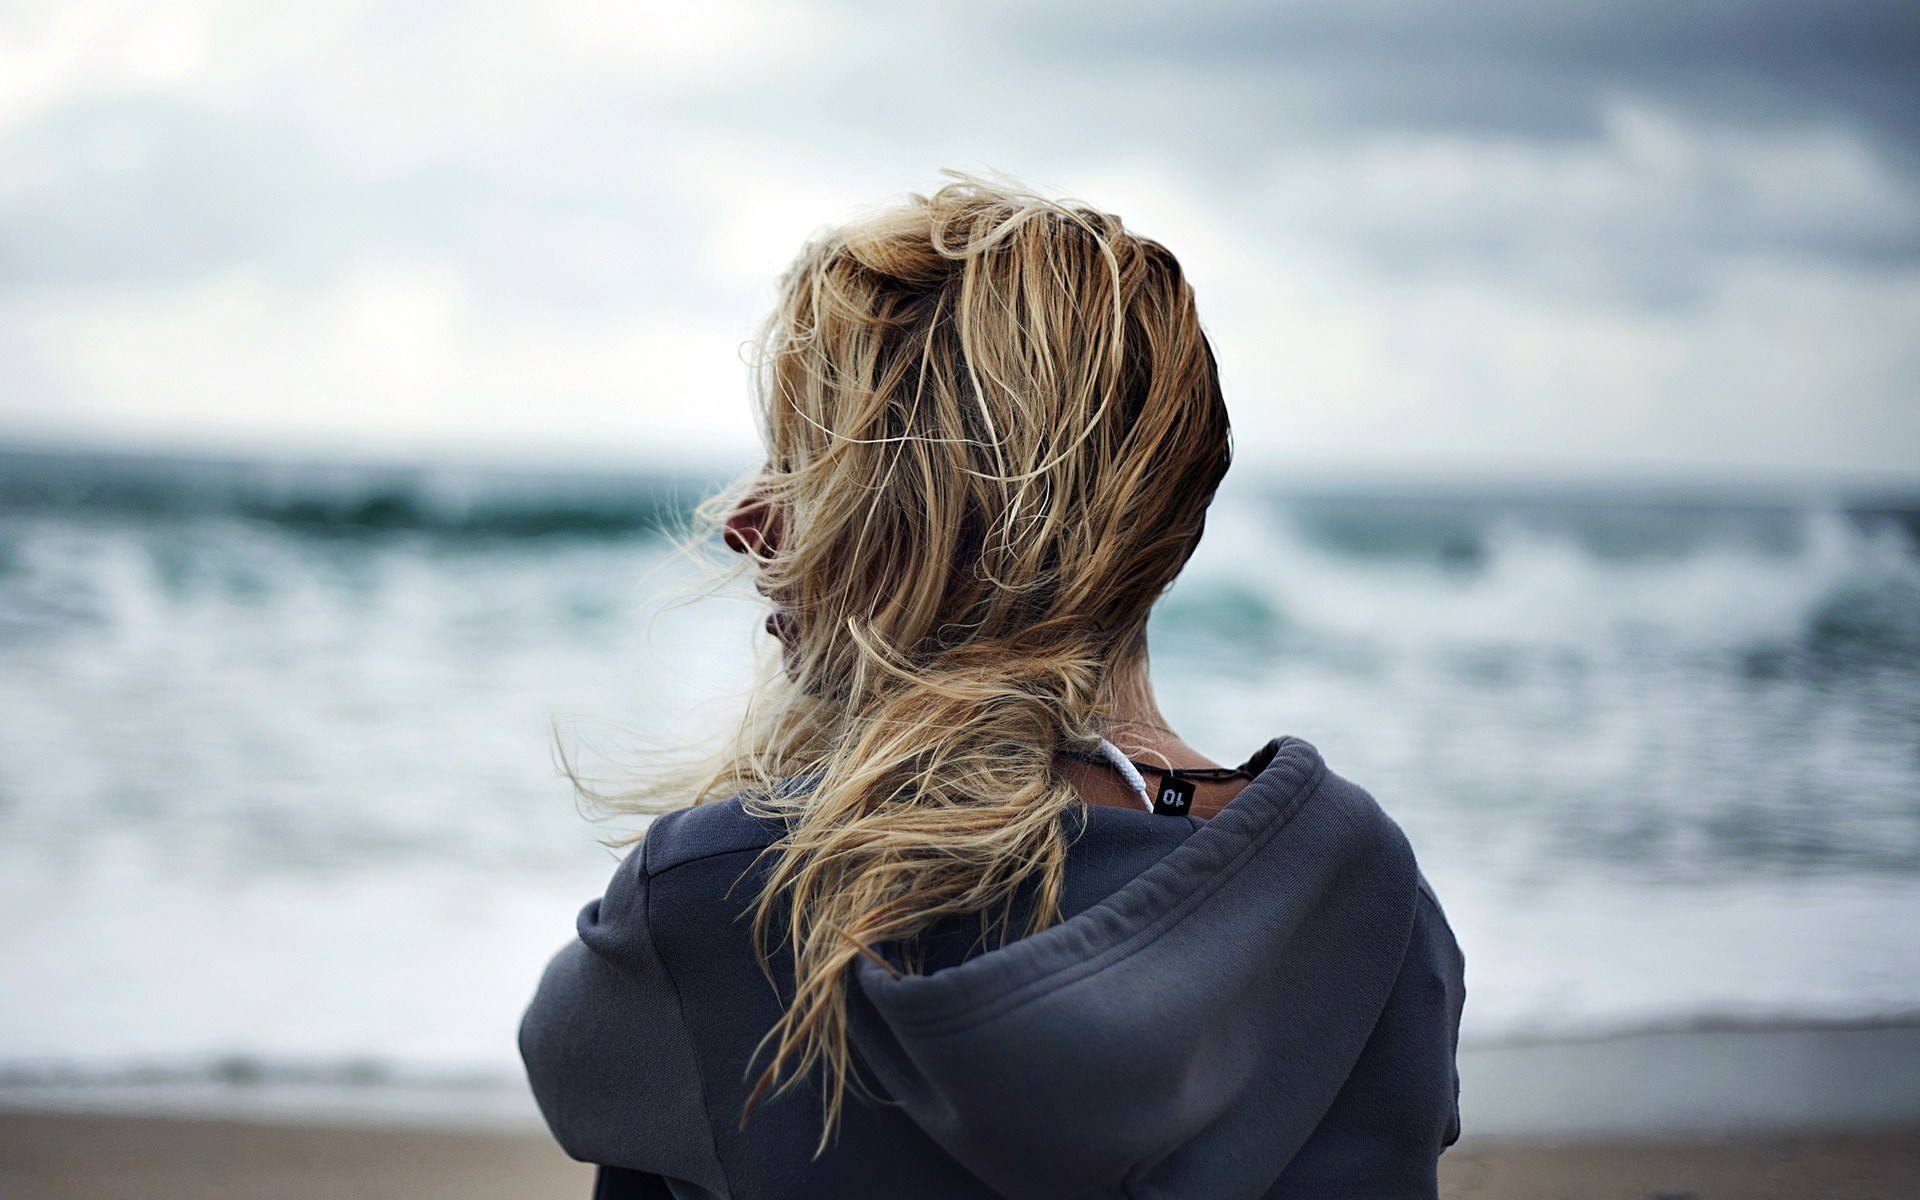 Woman standing near ocean